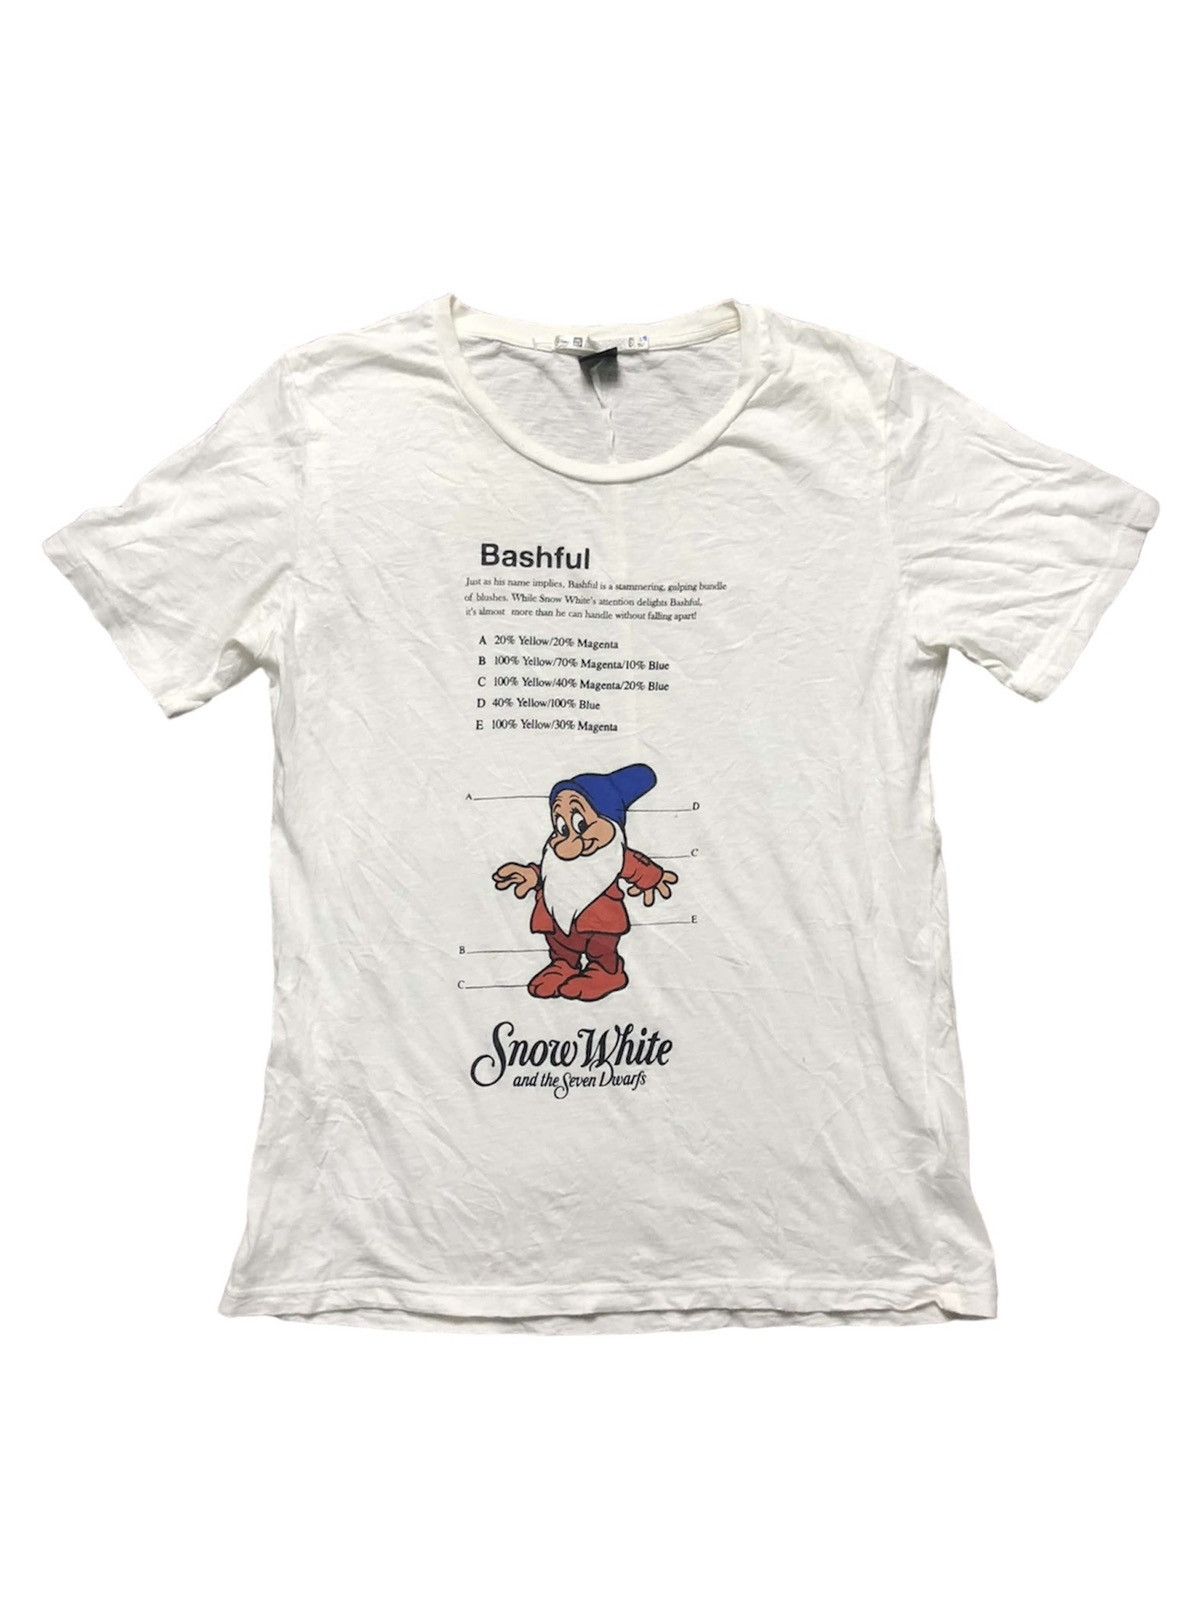 Snow White And The Seven Dwarf Uniqlo X Undercover T-Shirt - 1